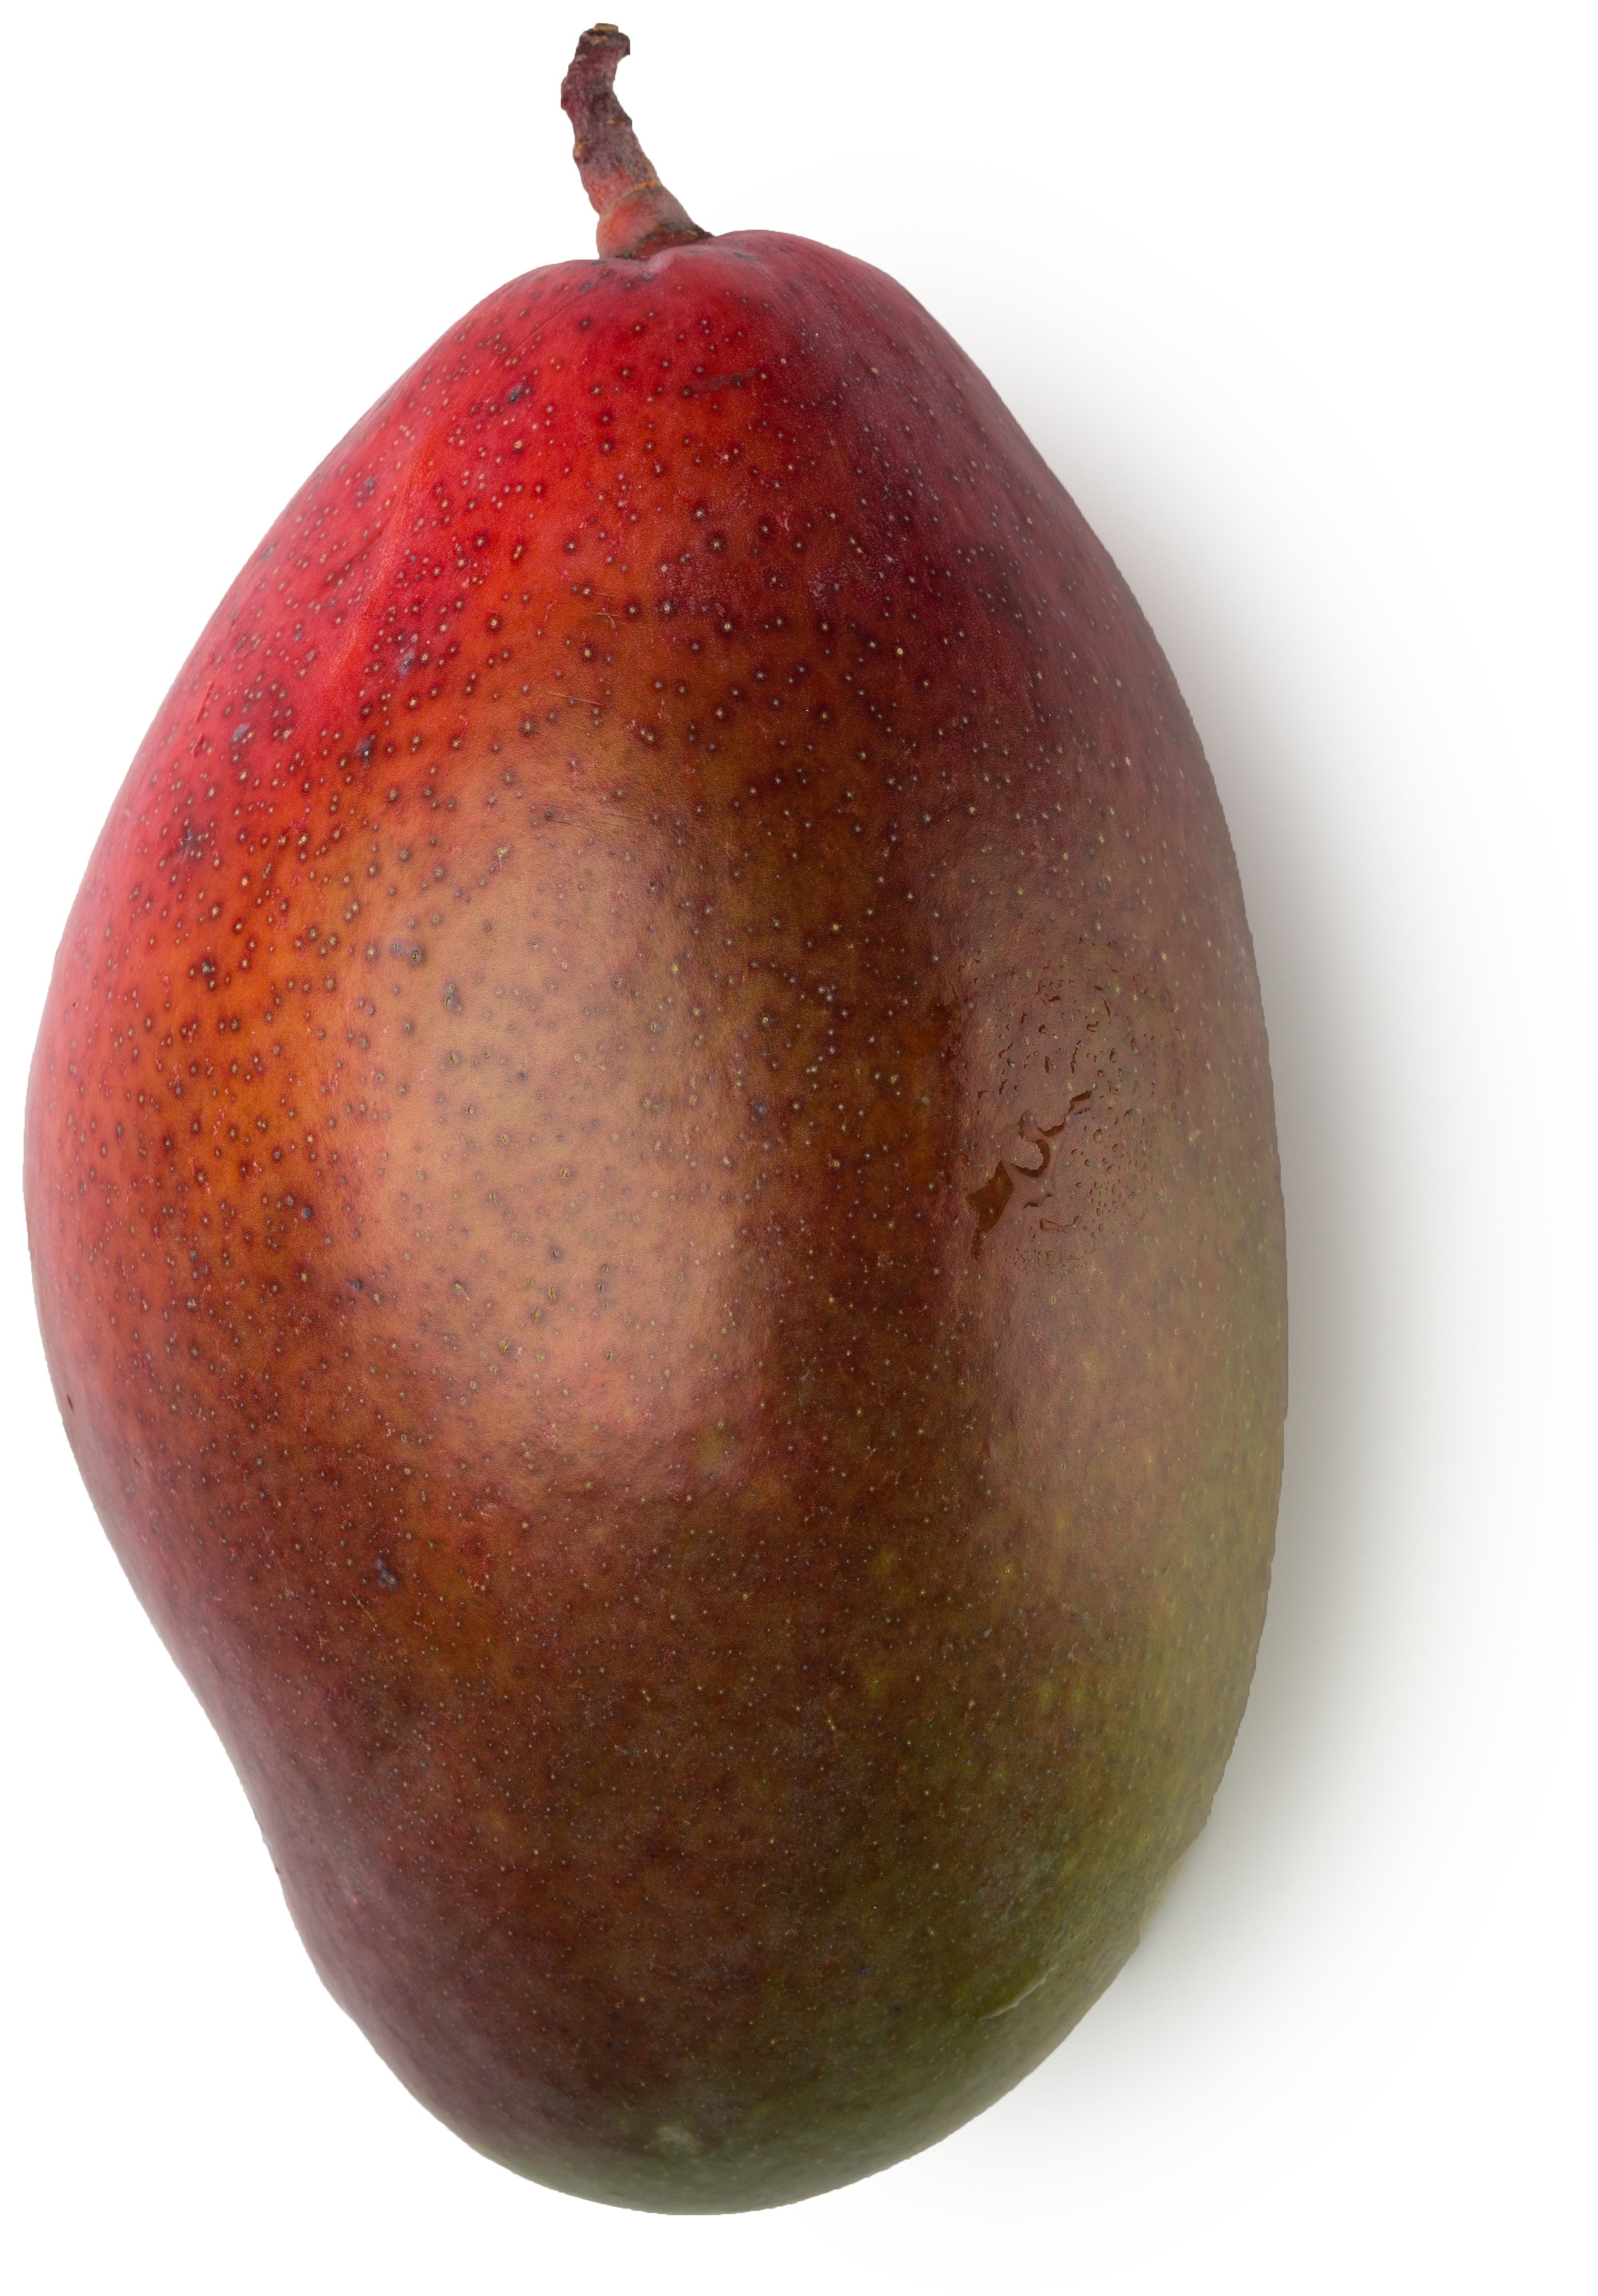 Absolue de feuille de manguier (Mangifera indica)